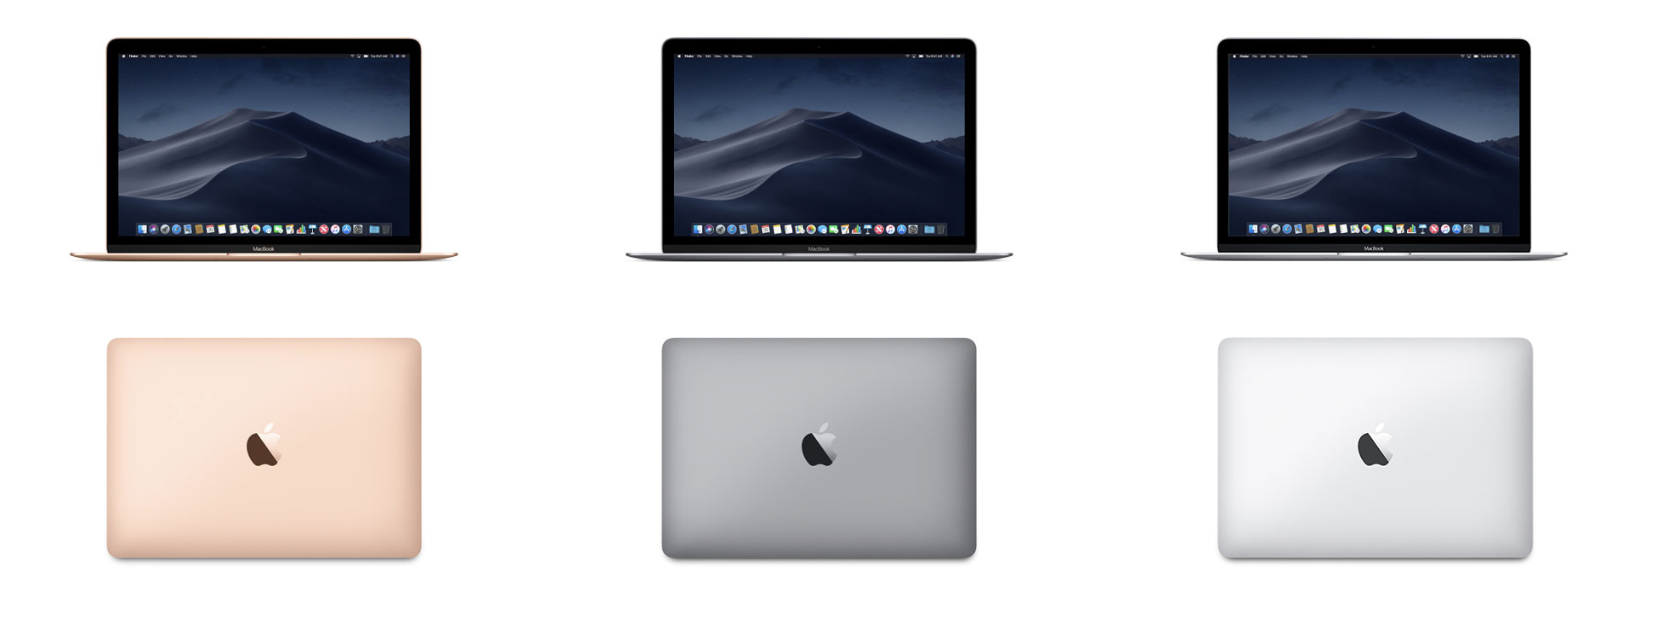 MacBook 12インチ新型、登場間近か - ITmedia NEWS